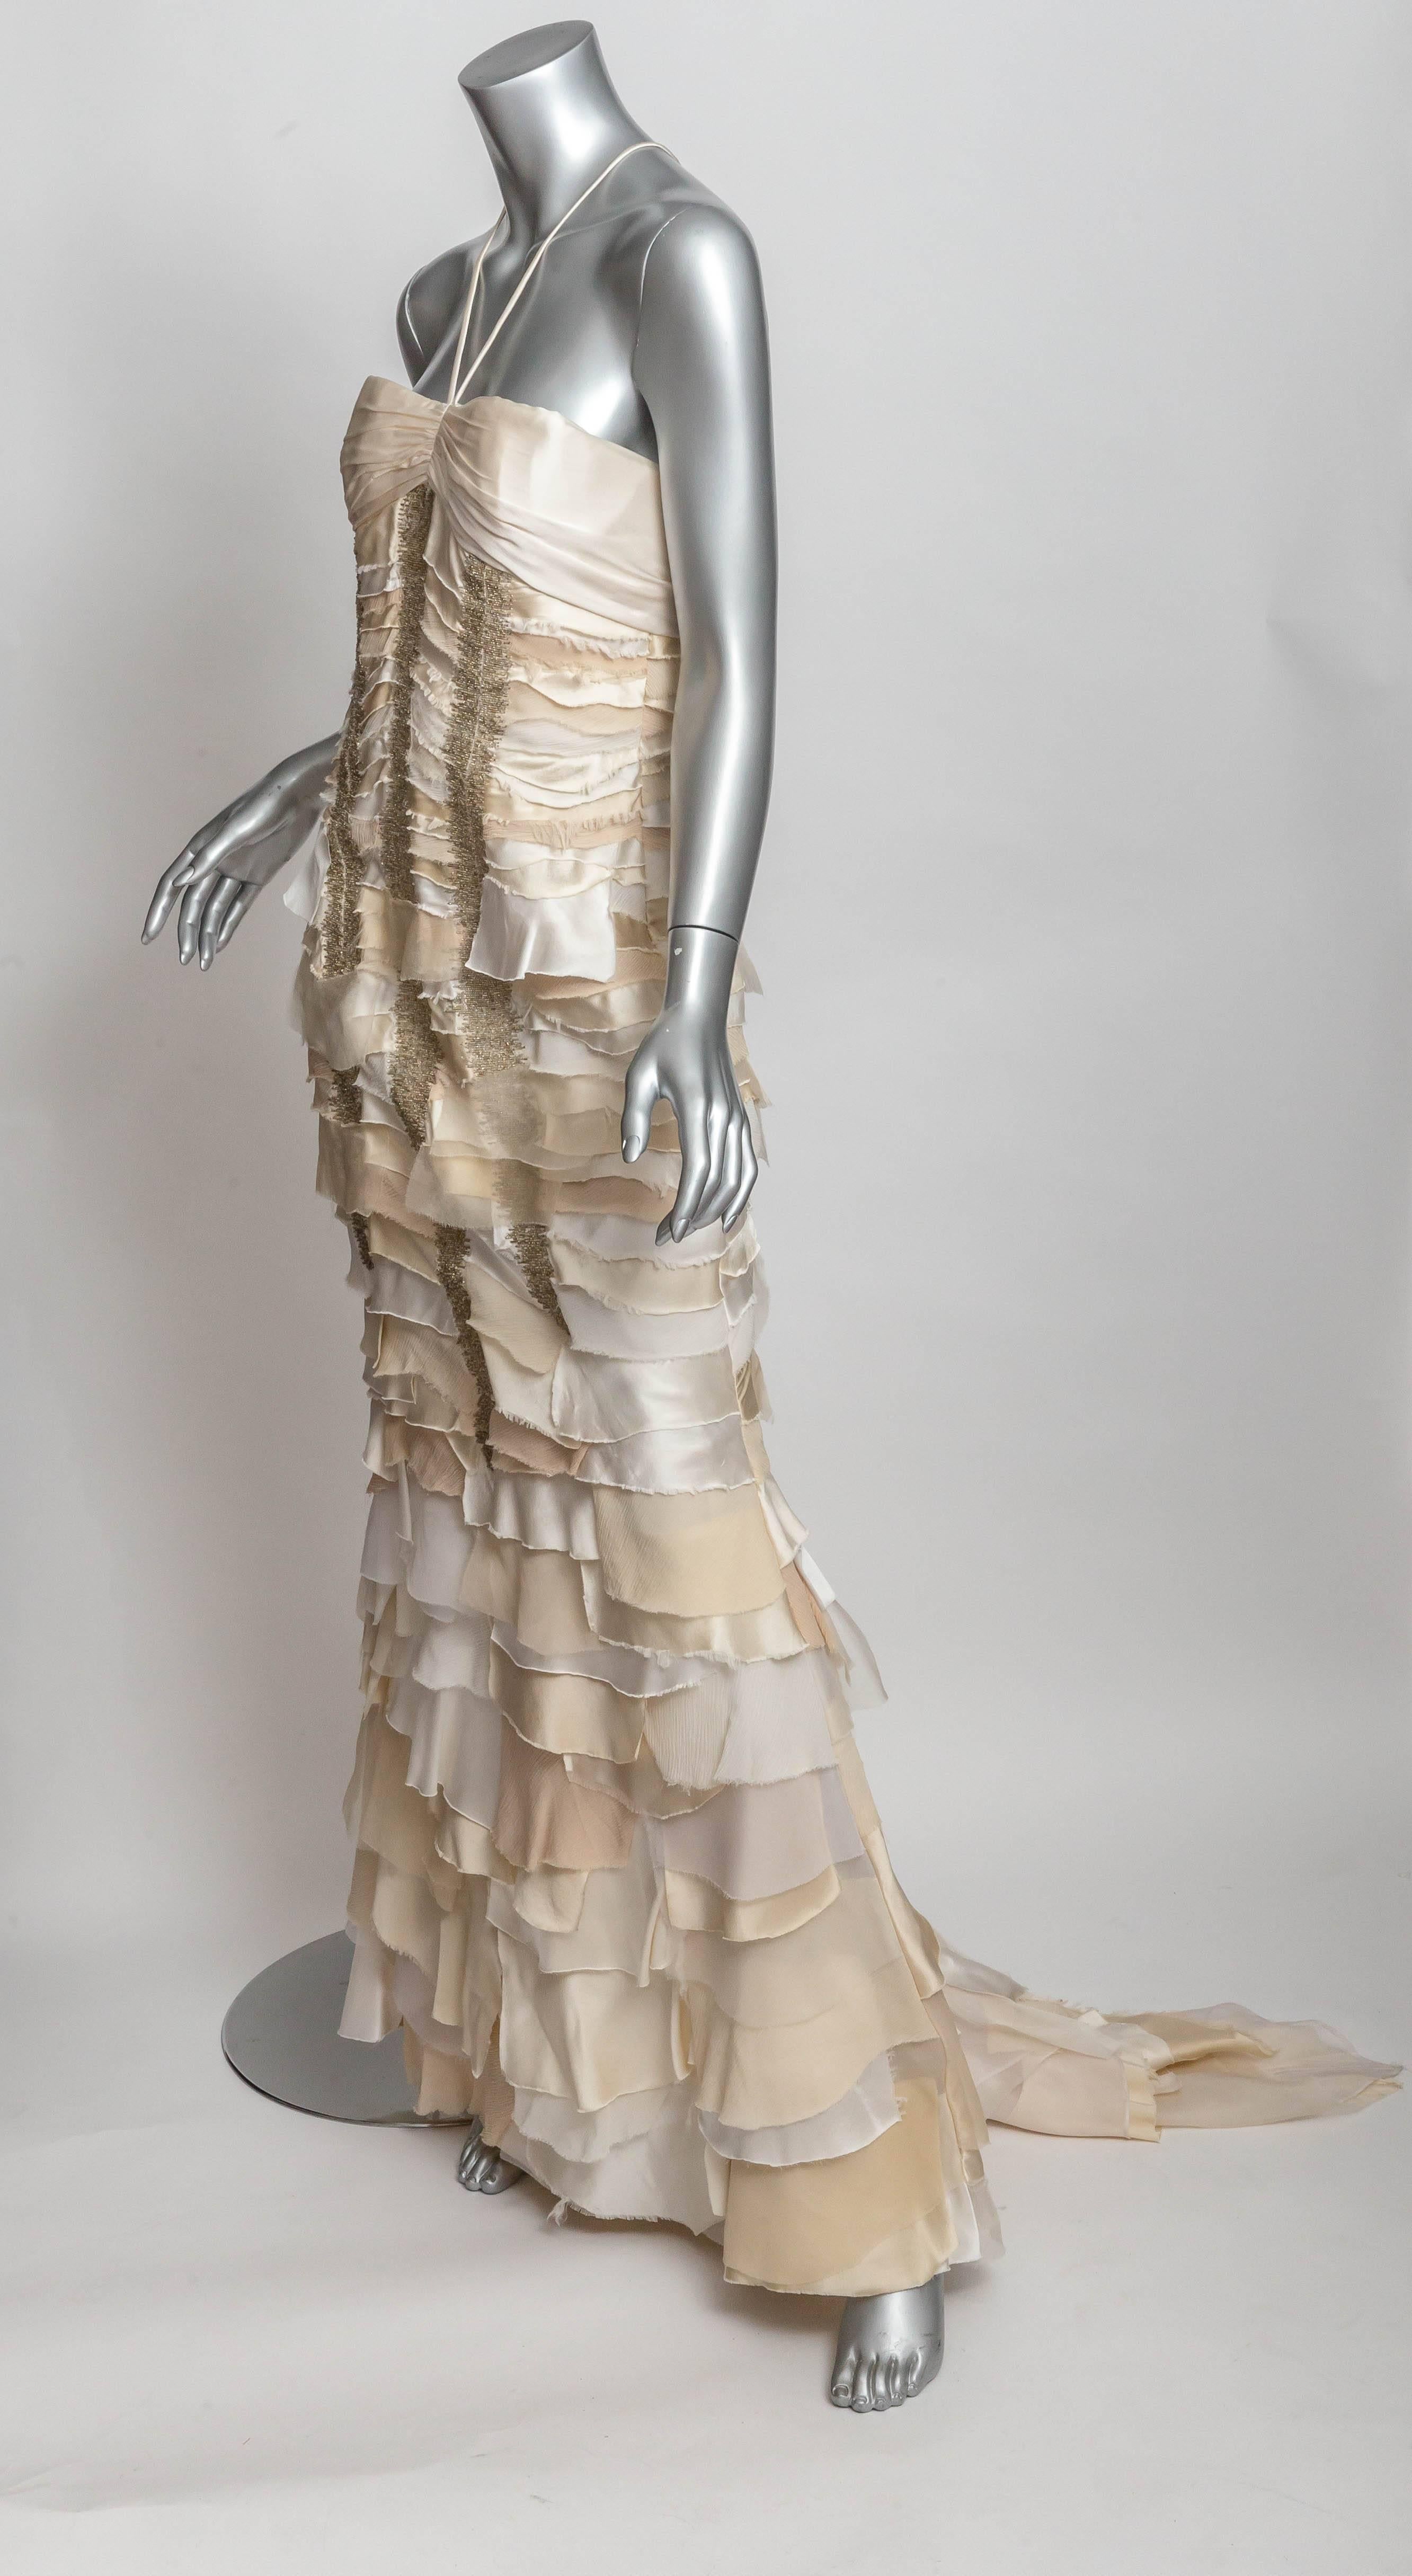 Stunning Carolina Herrera Silk Tiered Evening Gown in Shades of Nude.
Silk appears 